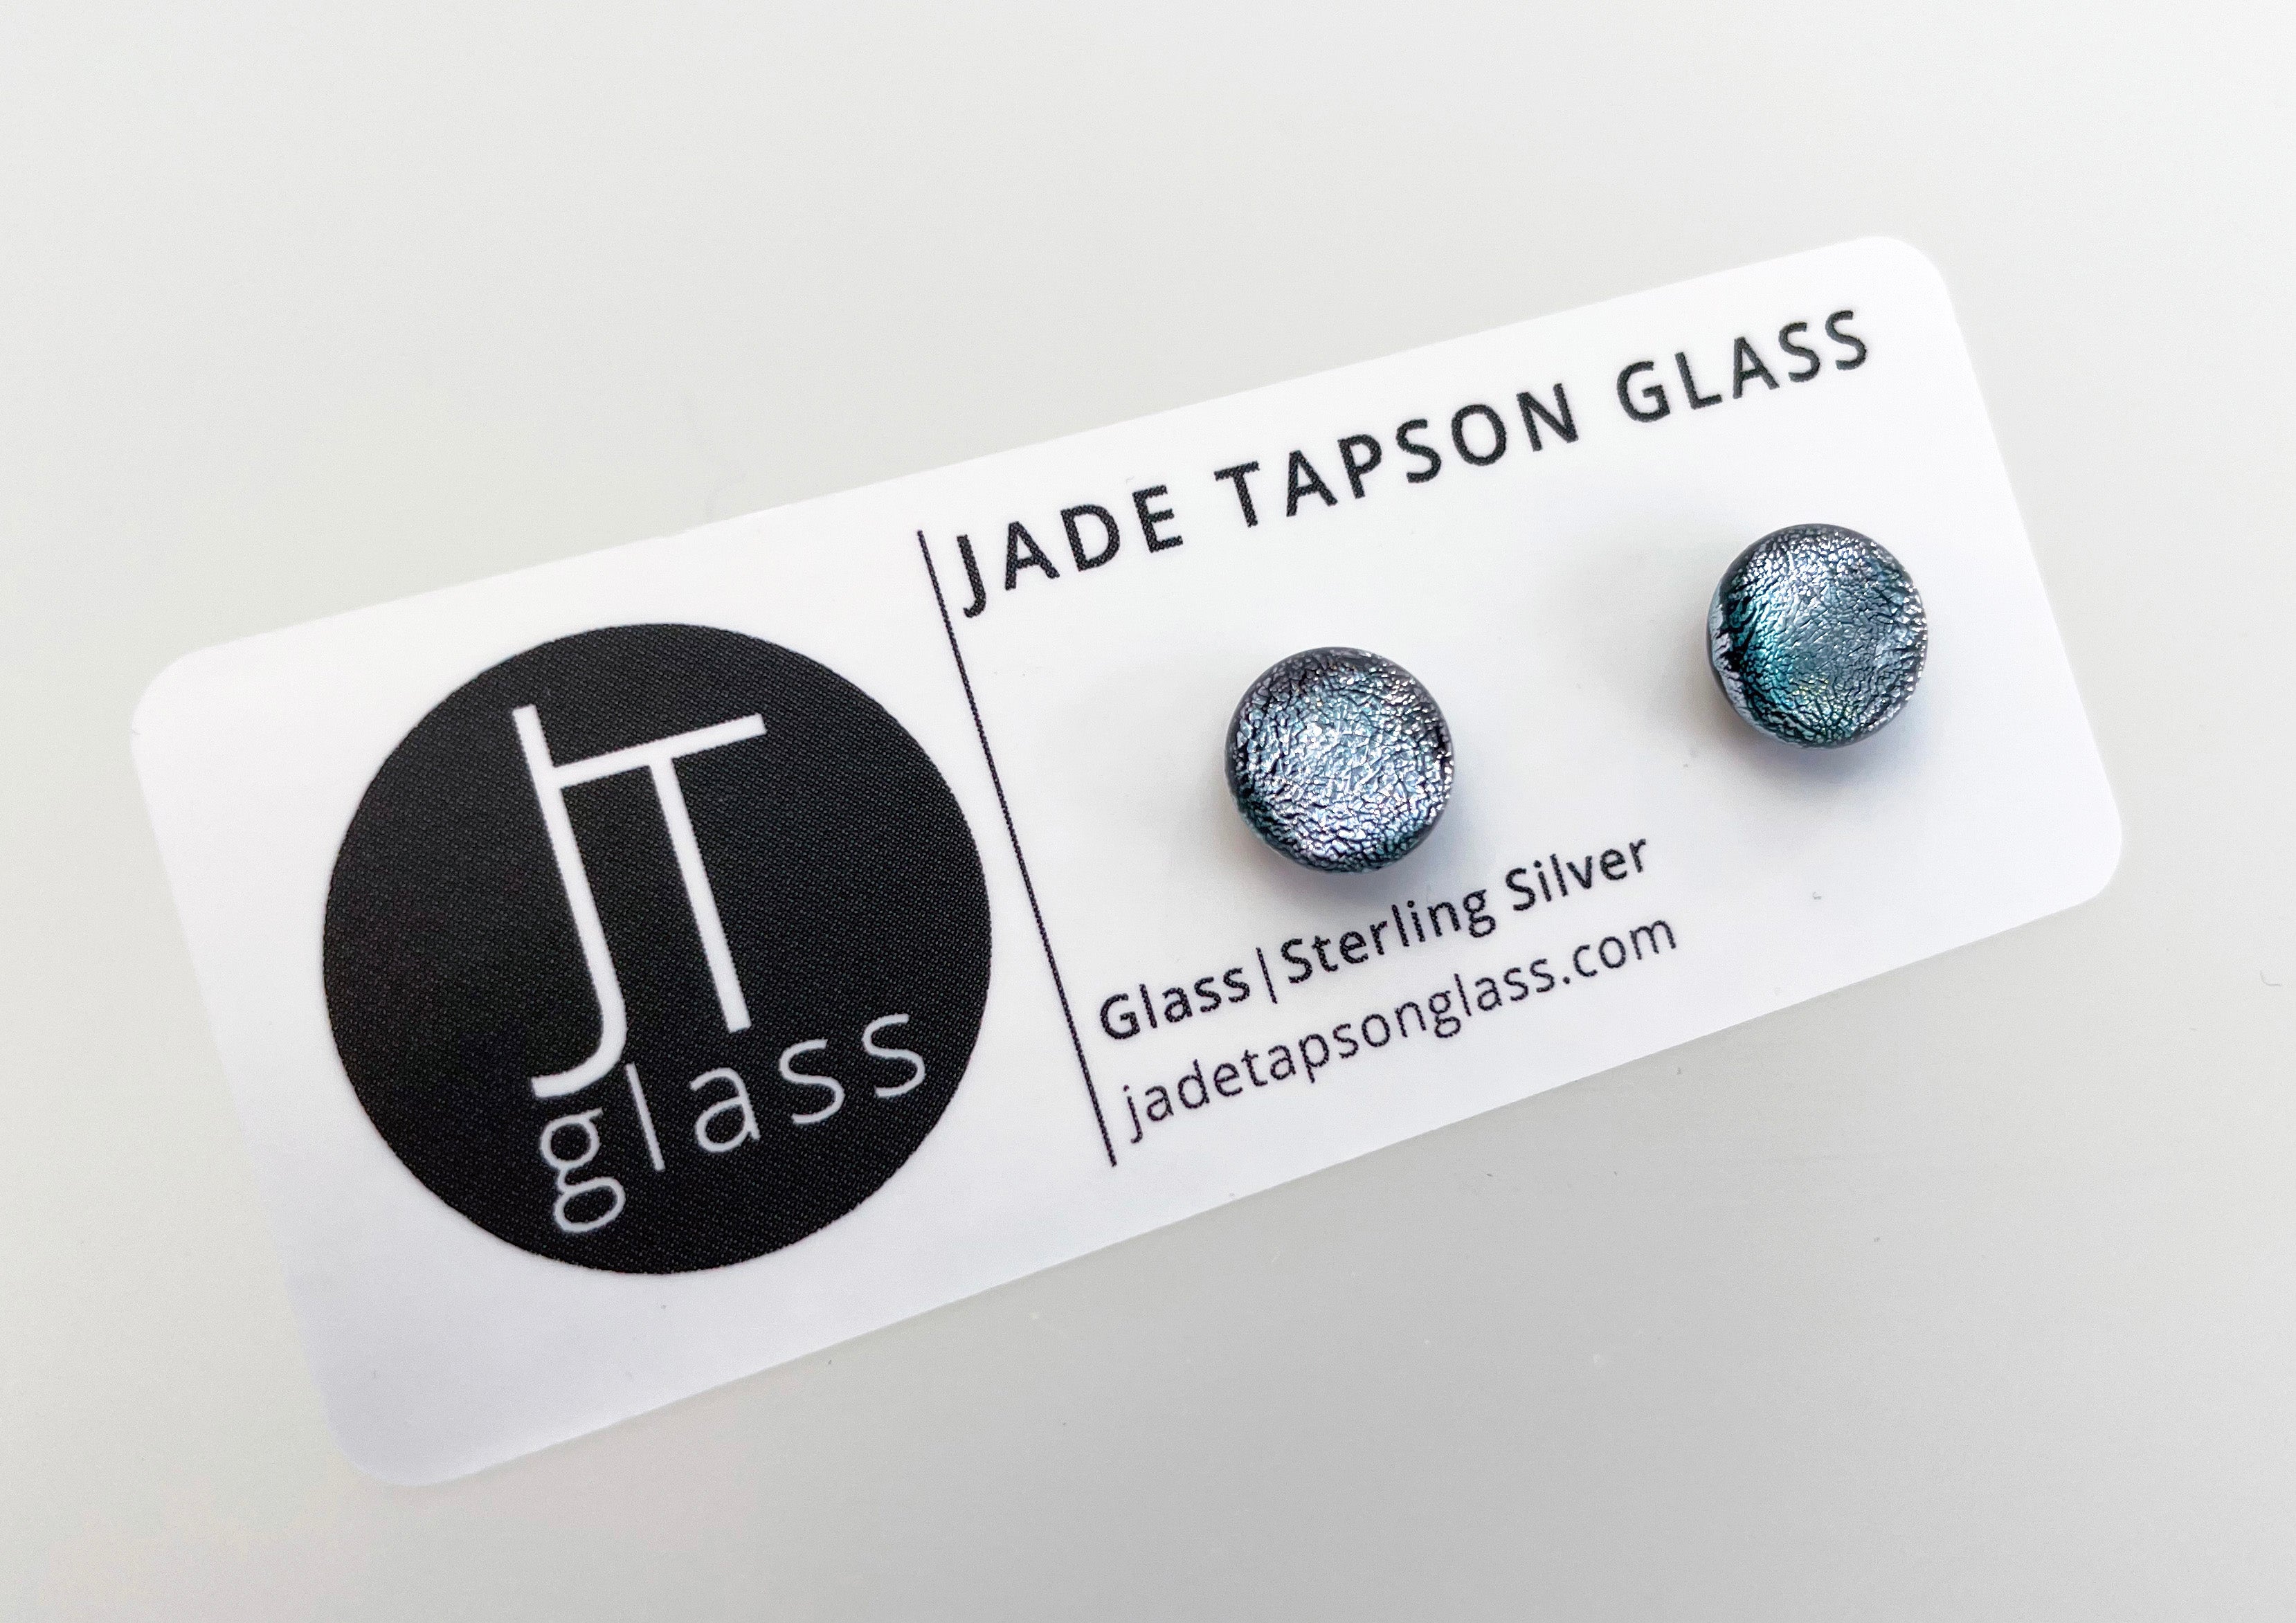 Jade Tapson - Dichroic Stud Sterling Silver Earrings -Silver